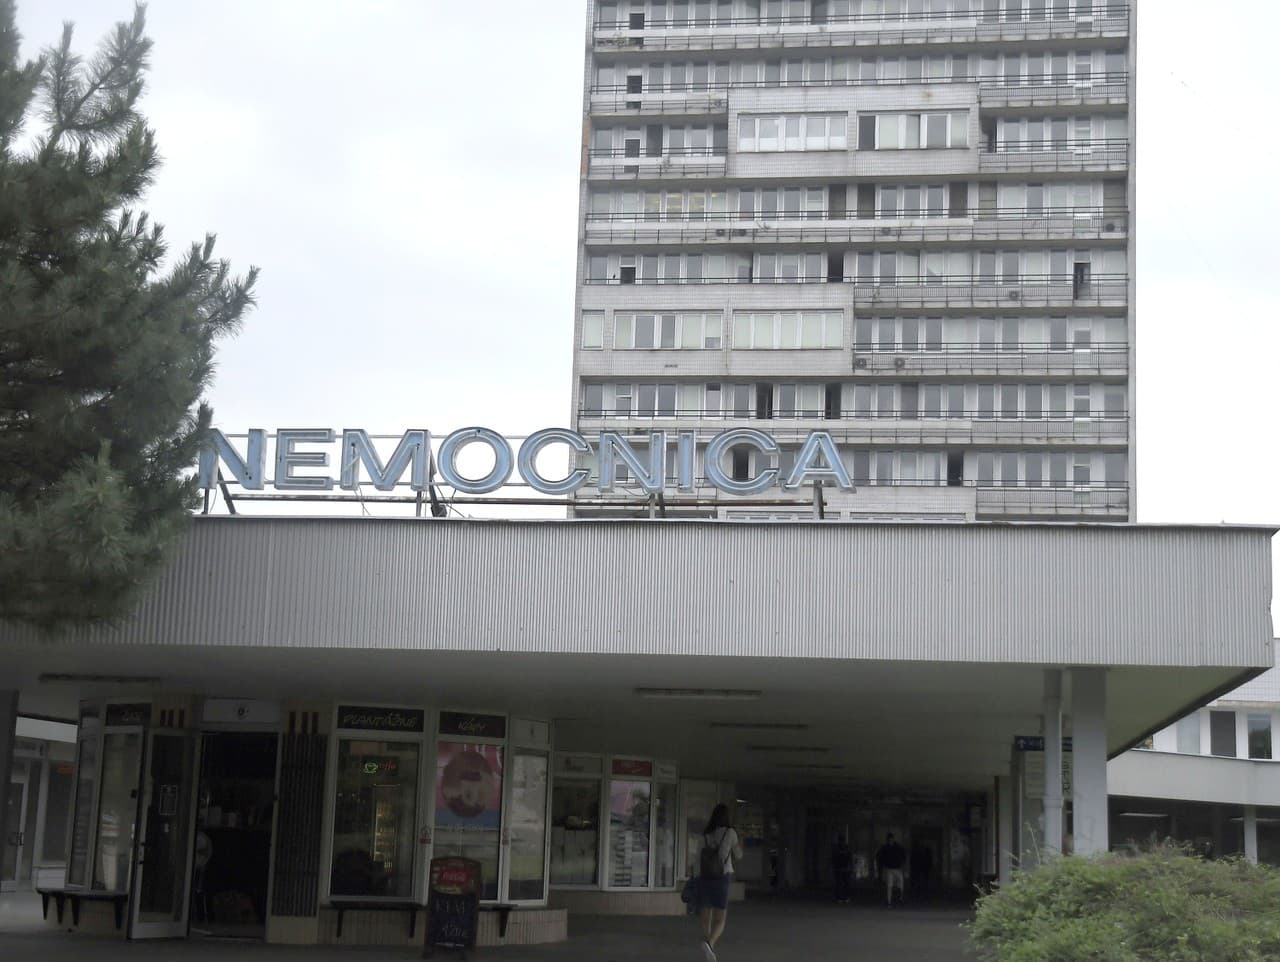 Univerzitná nemocnica Bratislava